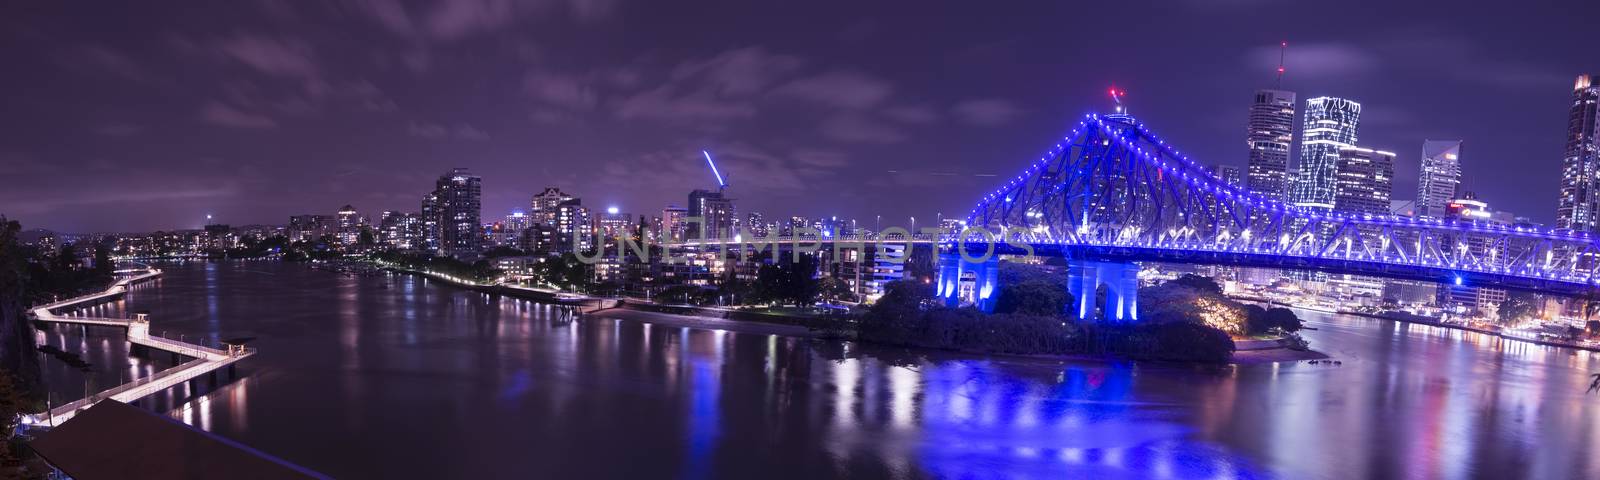 Story Bridge, river and Newfarm Riverwalk in Brisbane, Queenslan by artistrobd